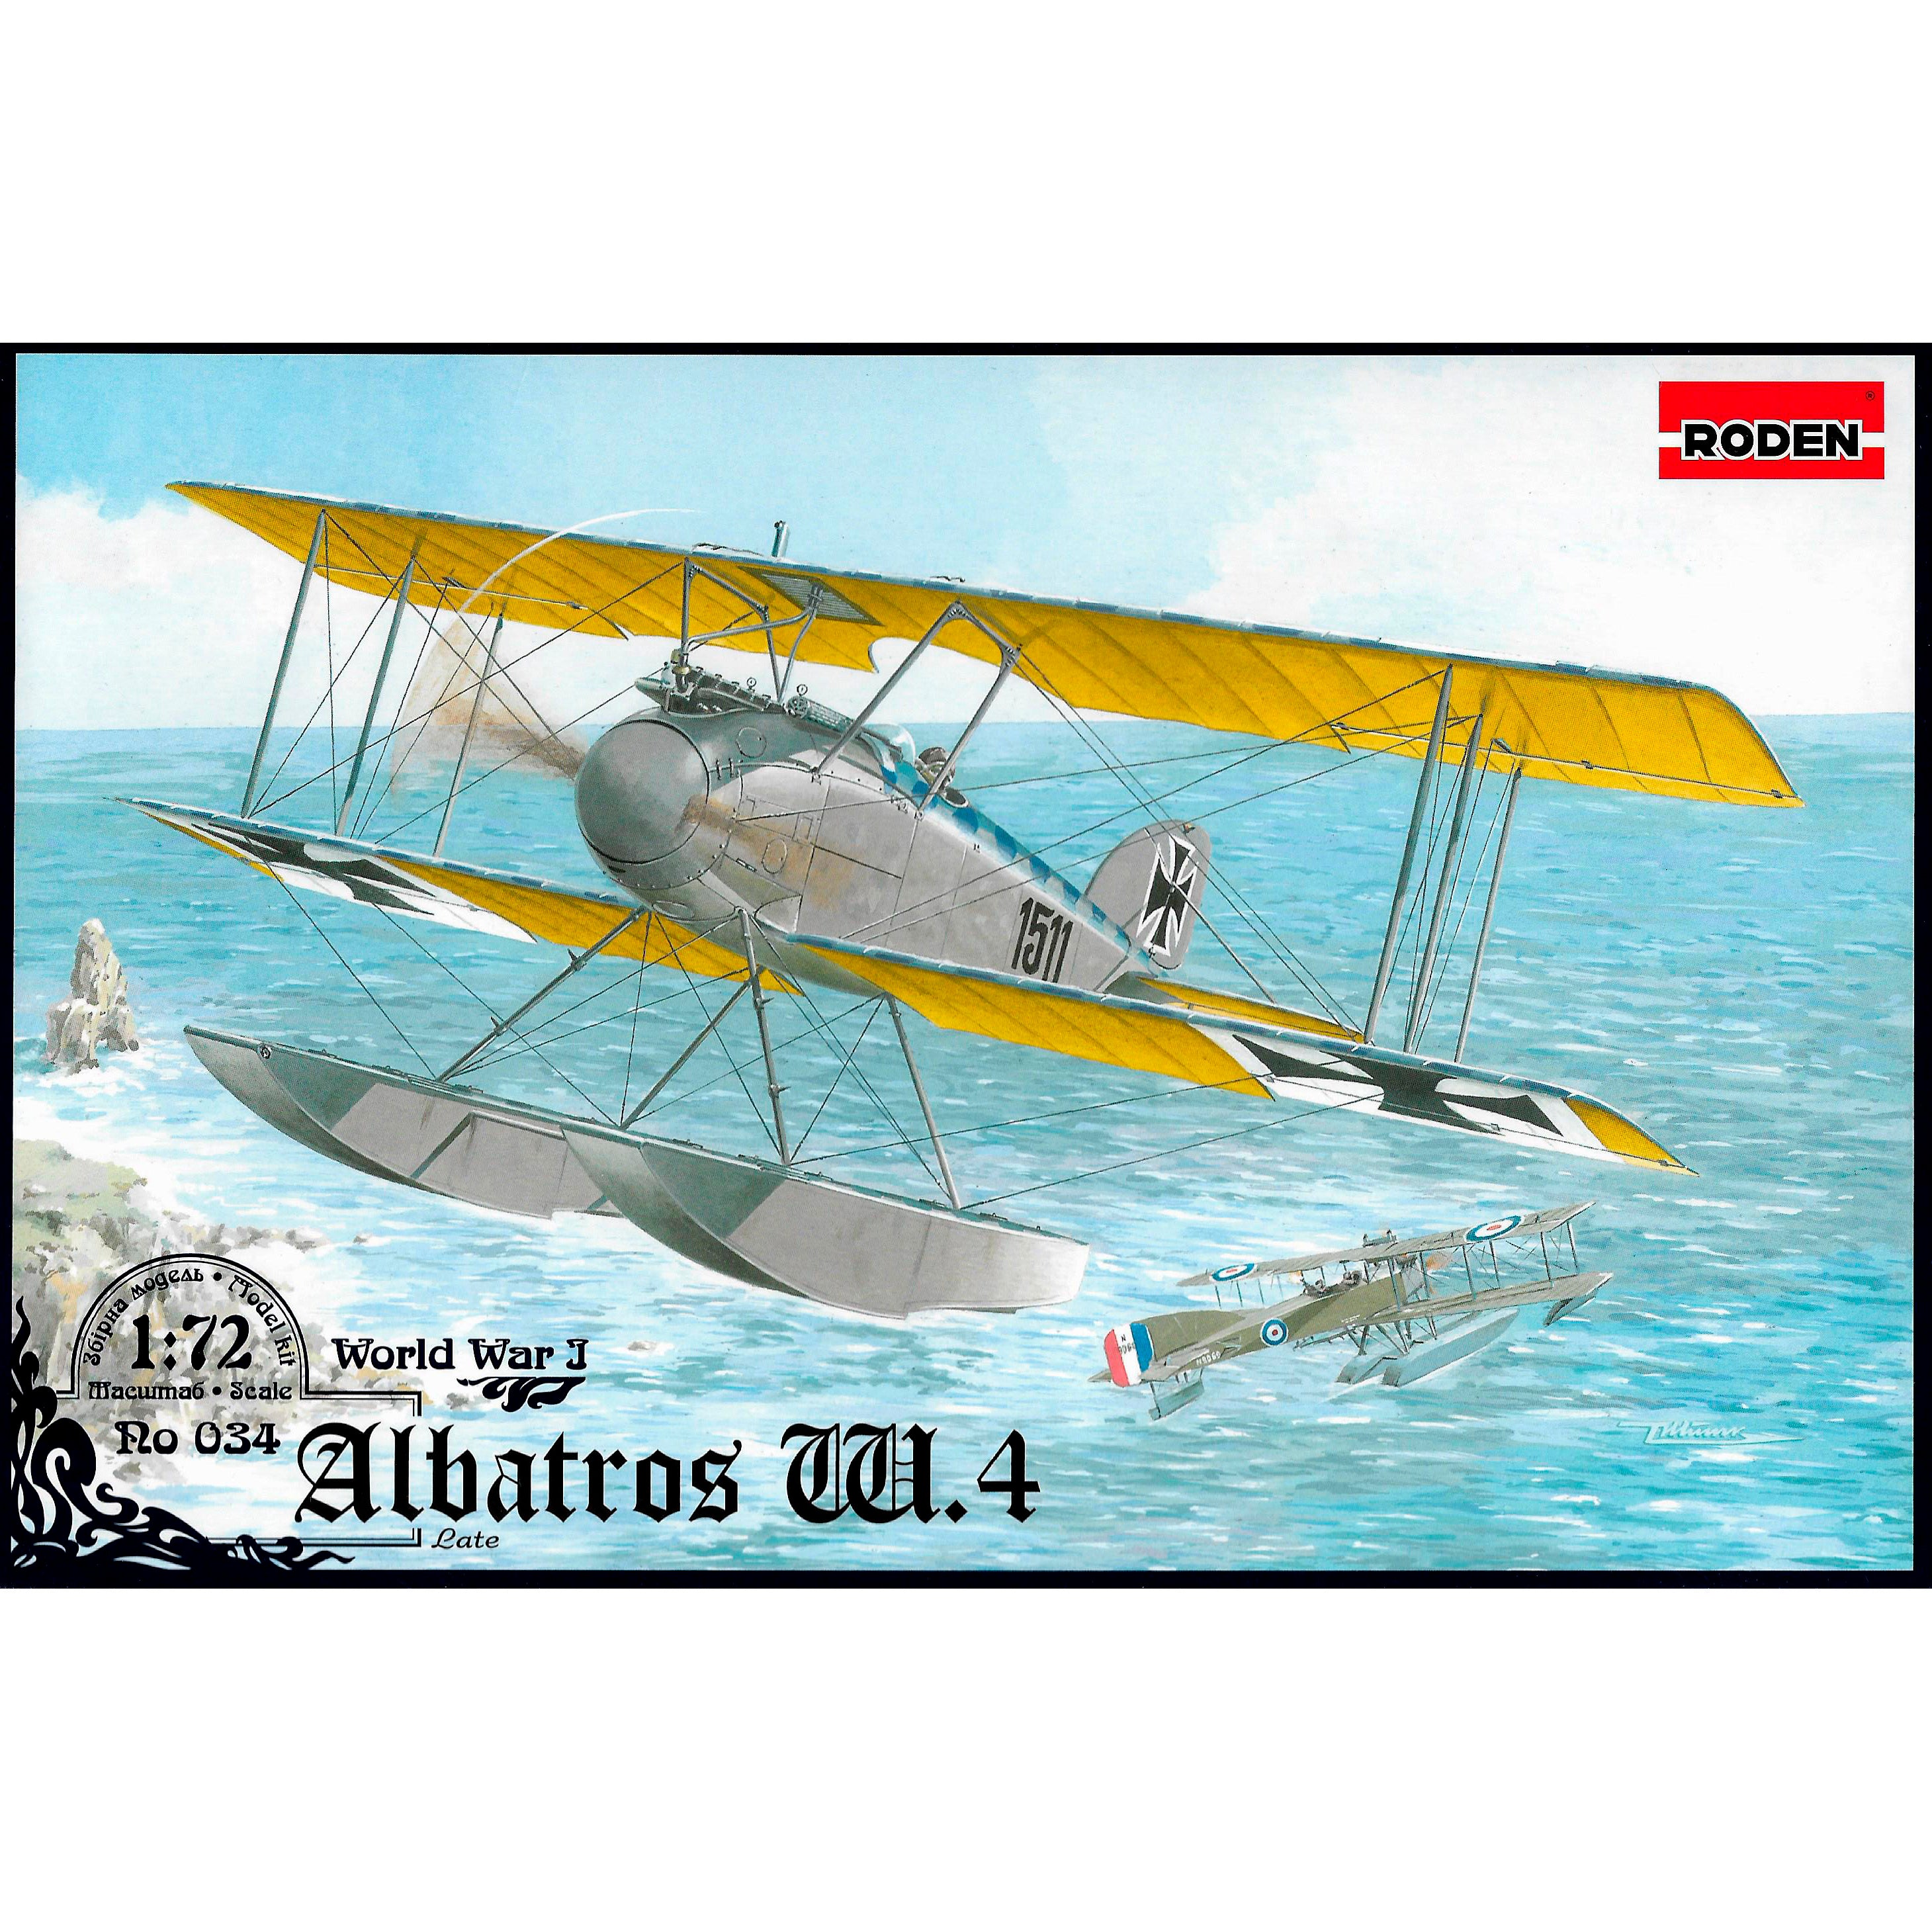 Roden 34 Albatros W.4 Late WWI BiPlane w/Floats 1/72 Scale Model Kit